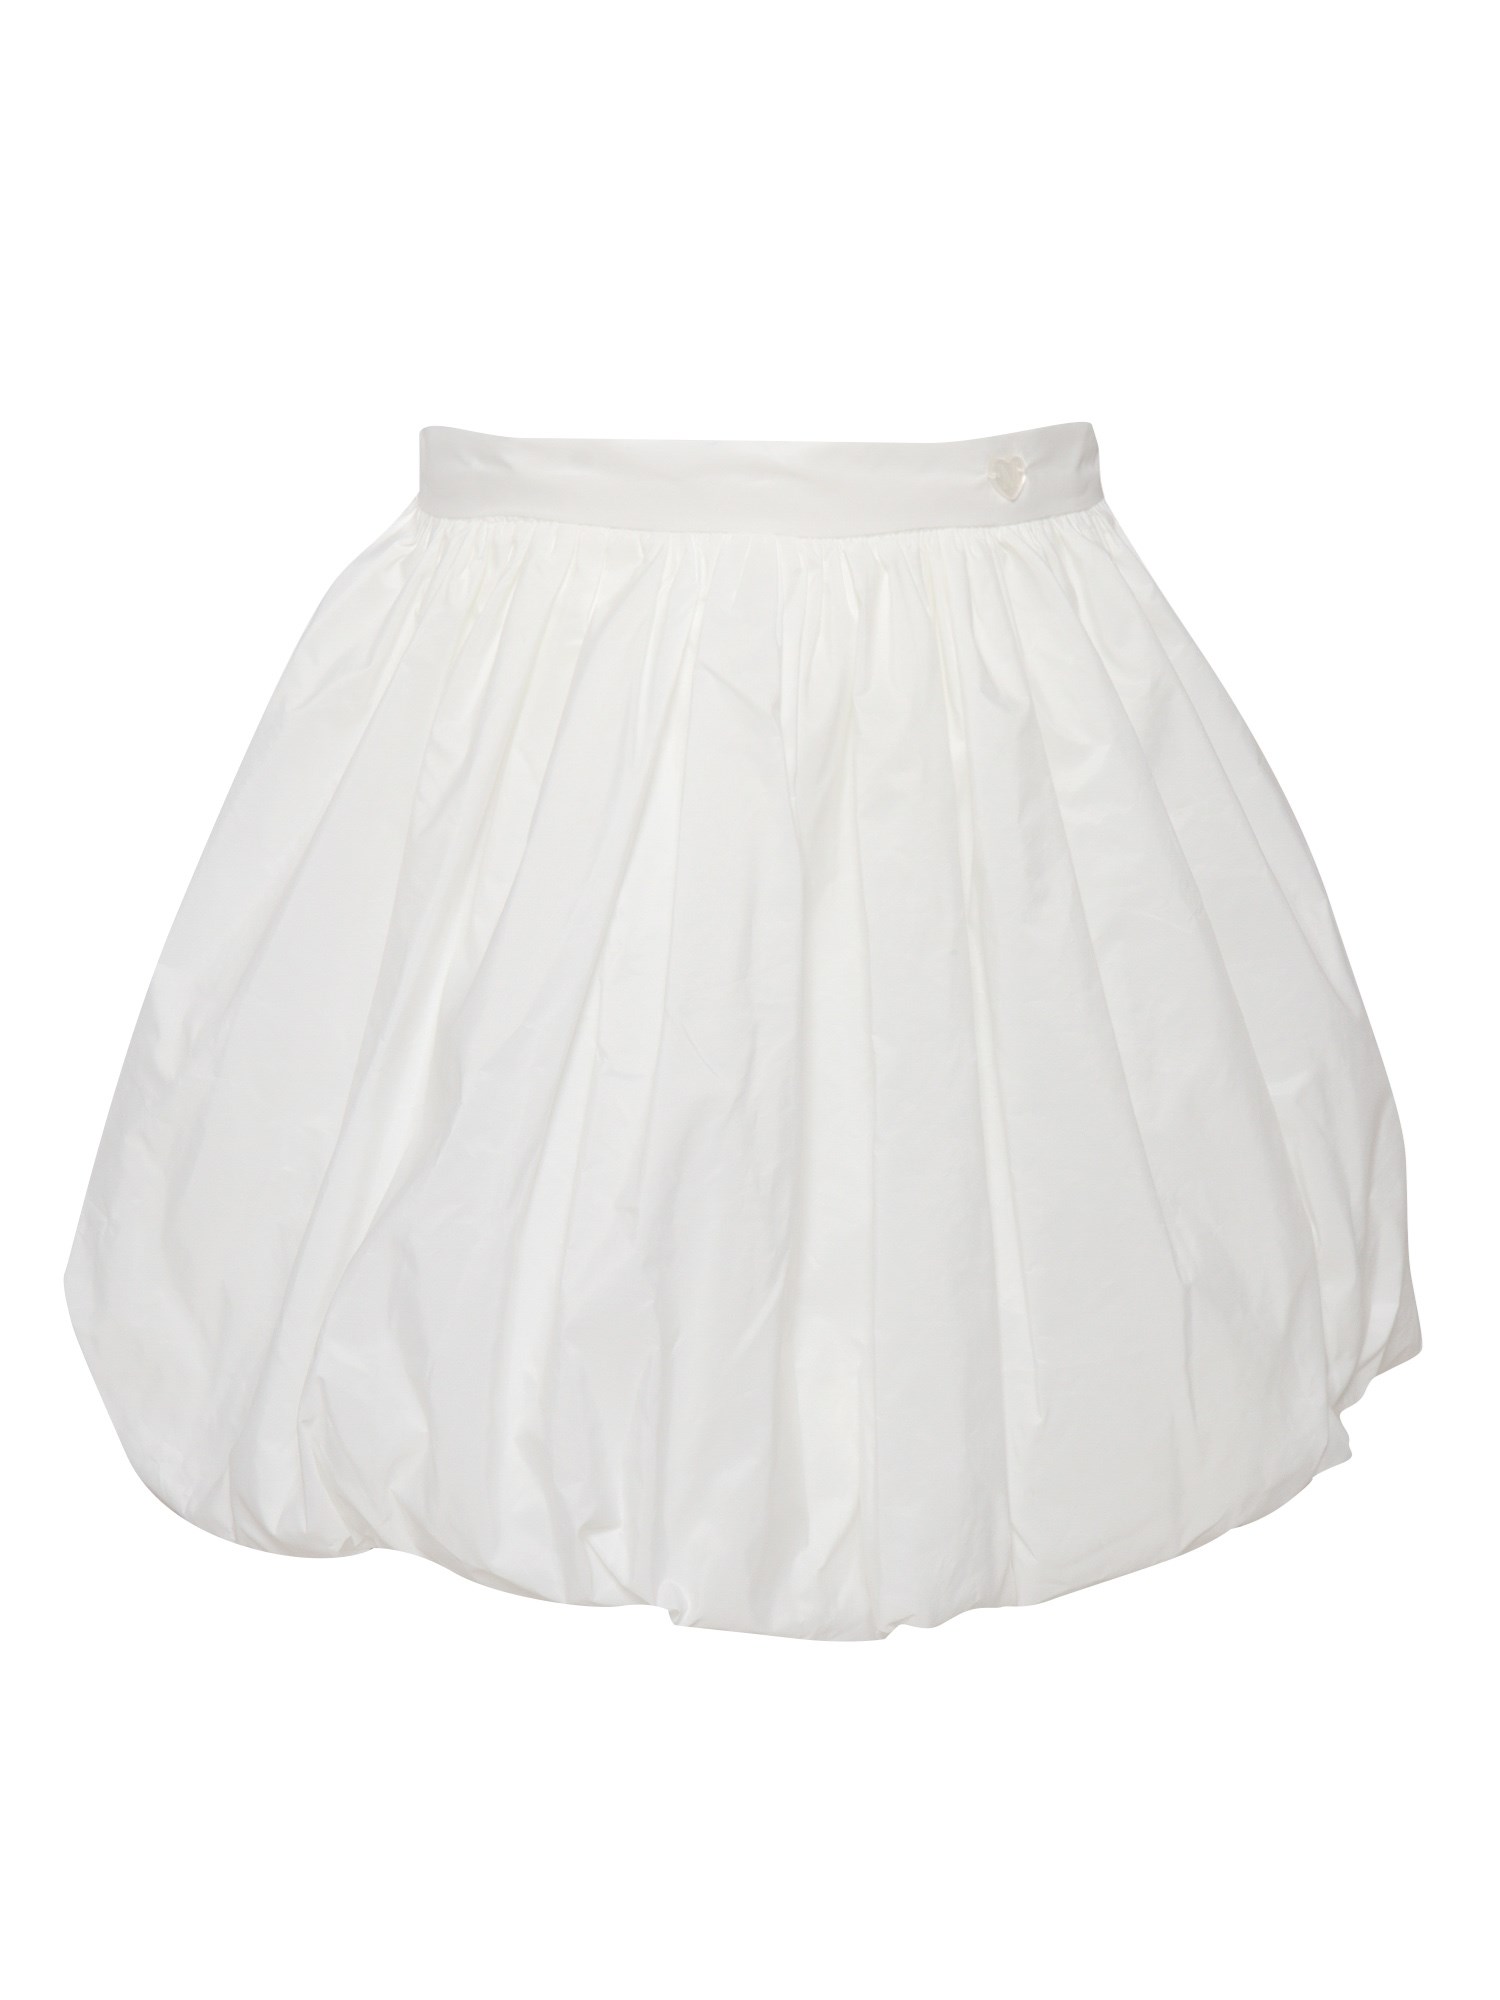 Monnalisa White Baloon Skirt